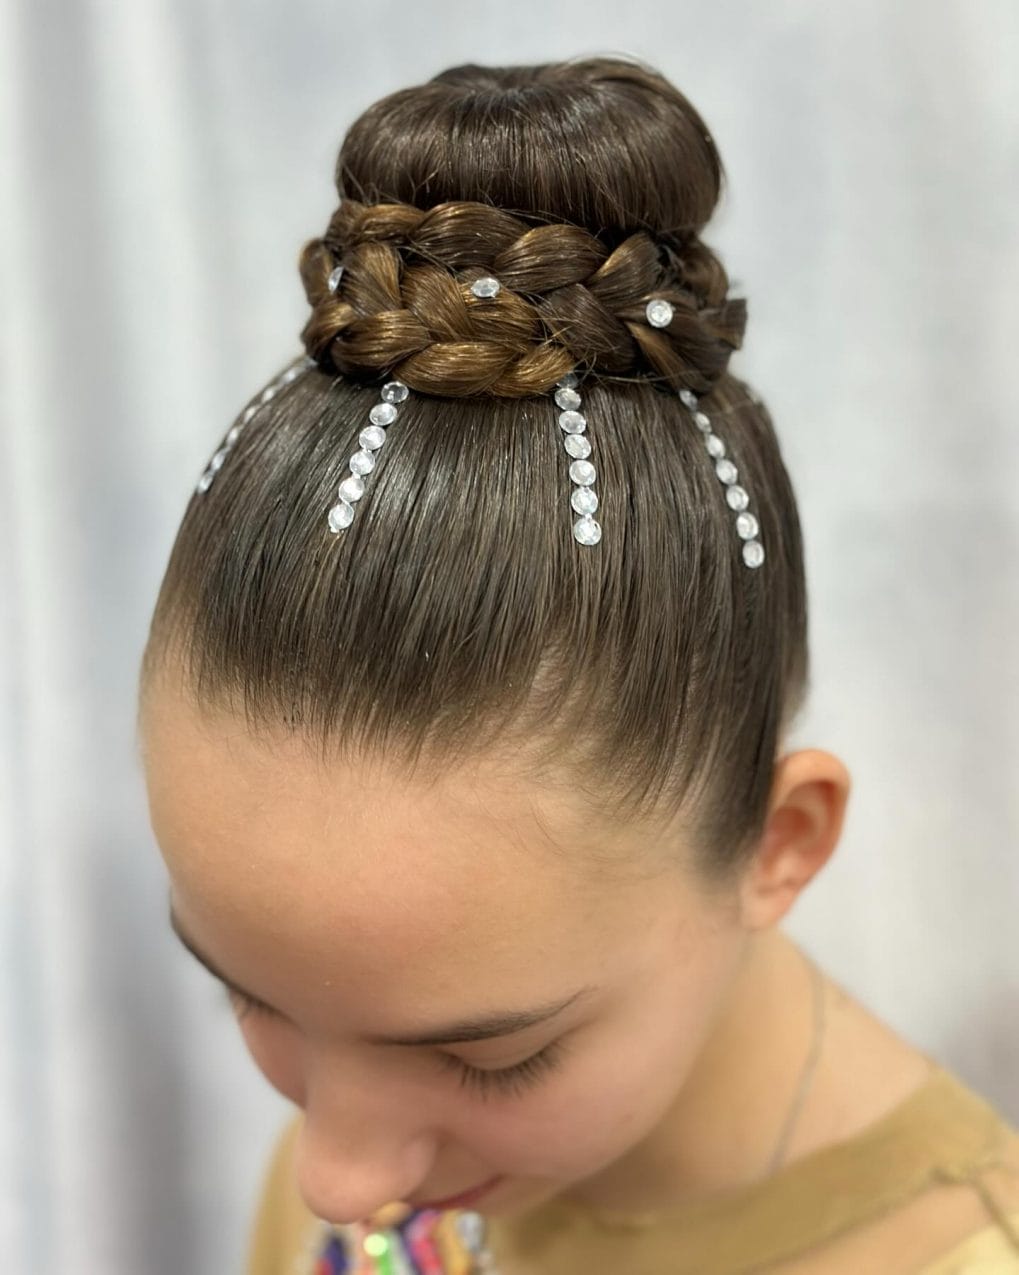 Regal braided crown high bun with silver gem accents